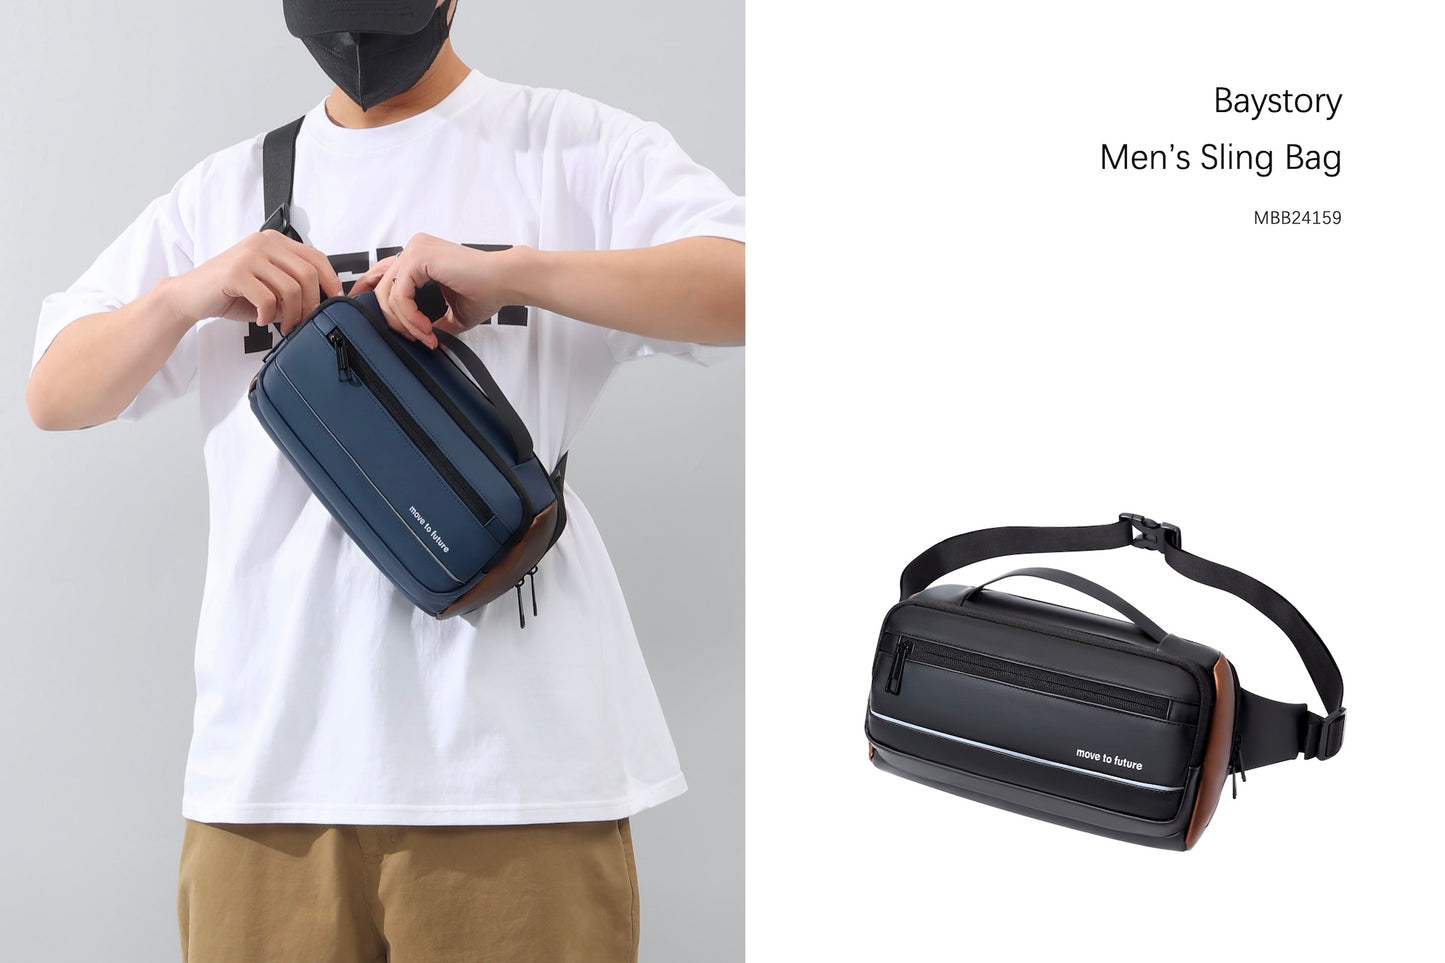 Men's Sling Bag MBB24159 - Baystory